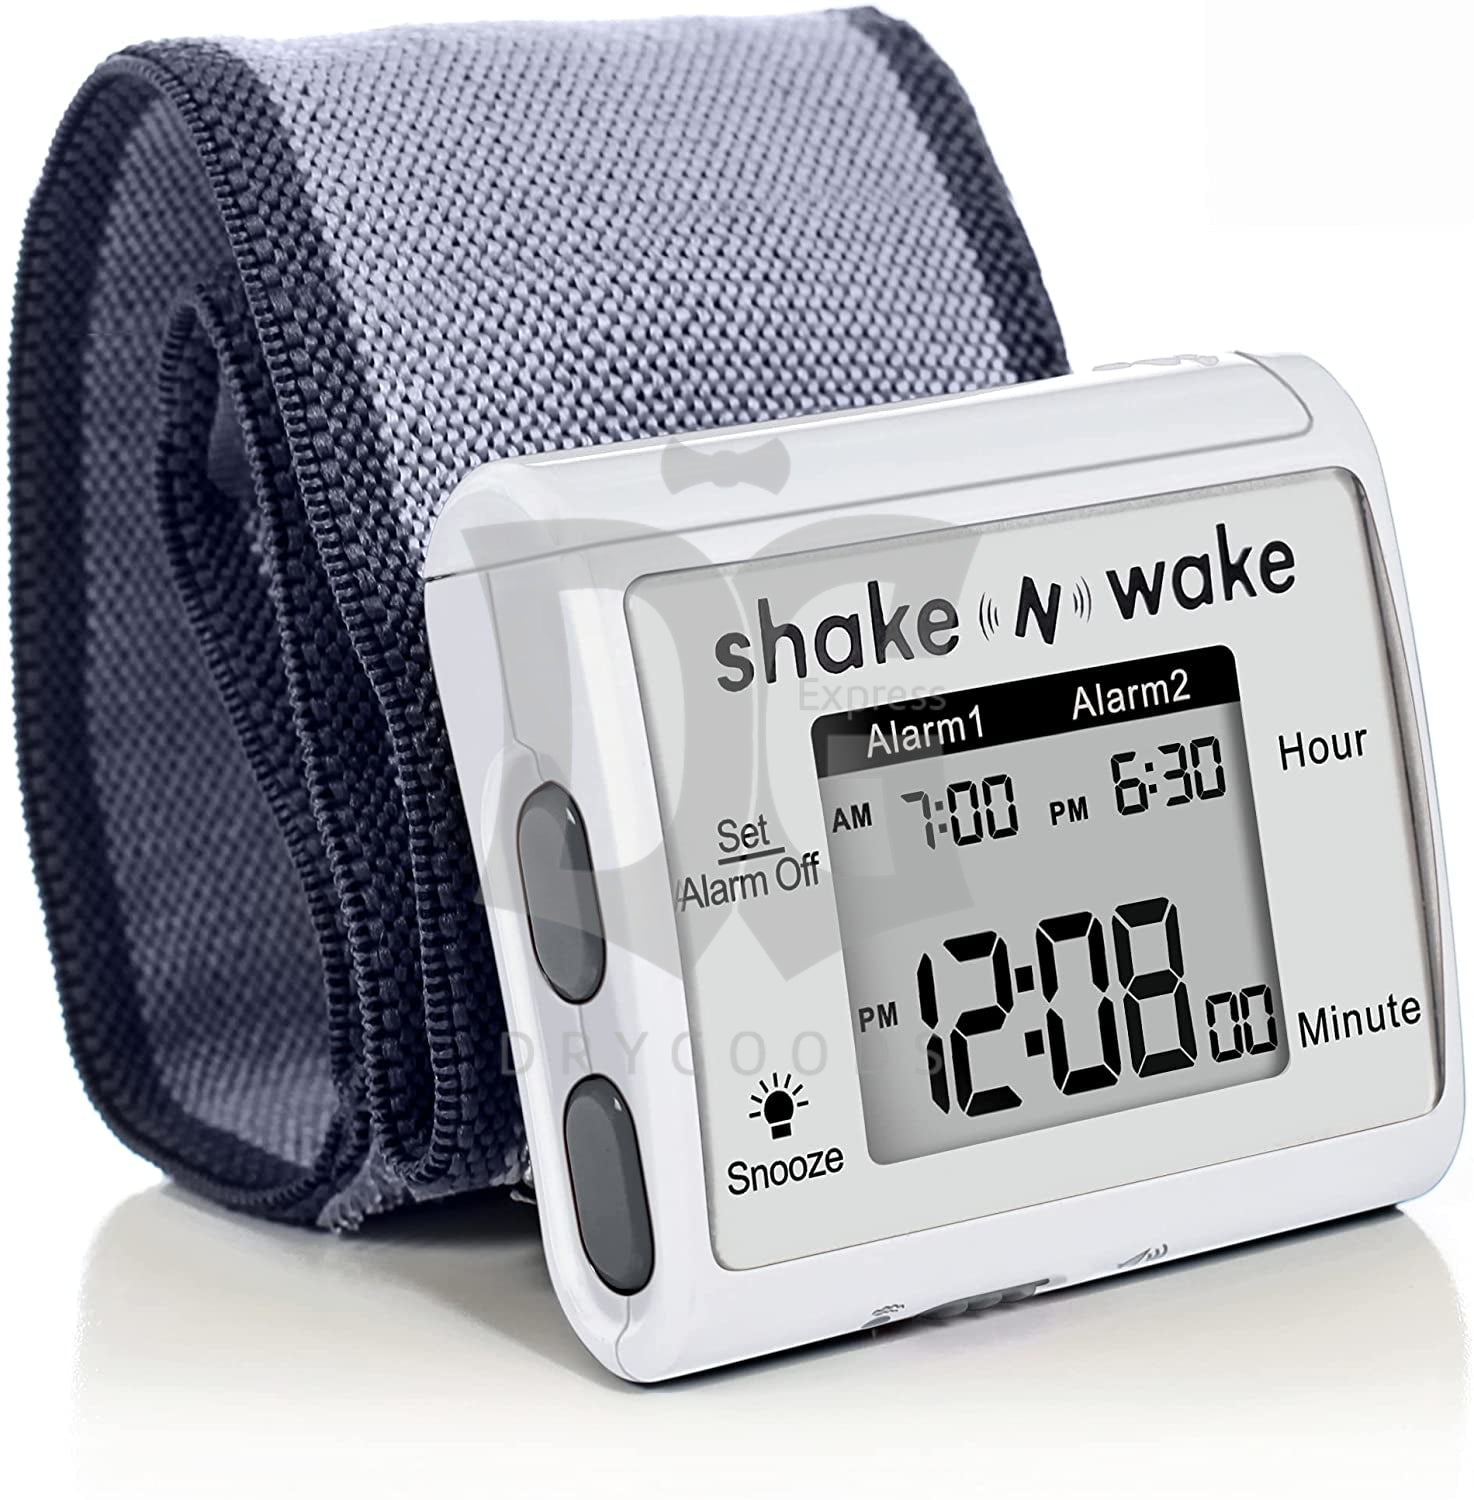 Shake -N- Wake Vibrating Wrist Watch